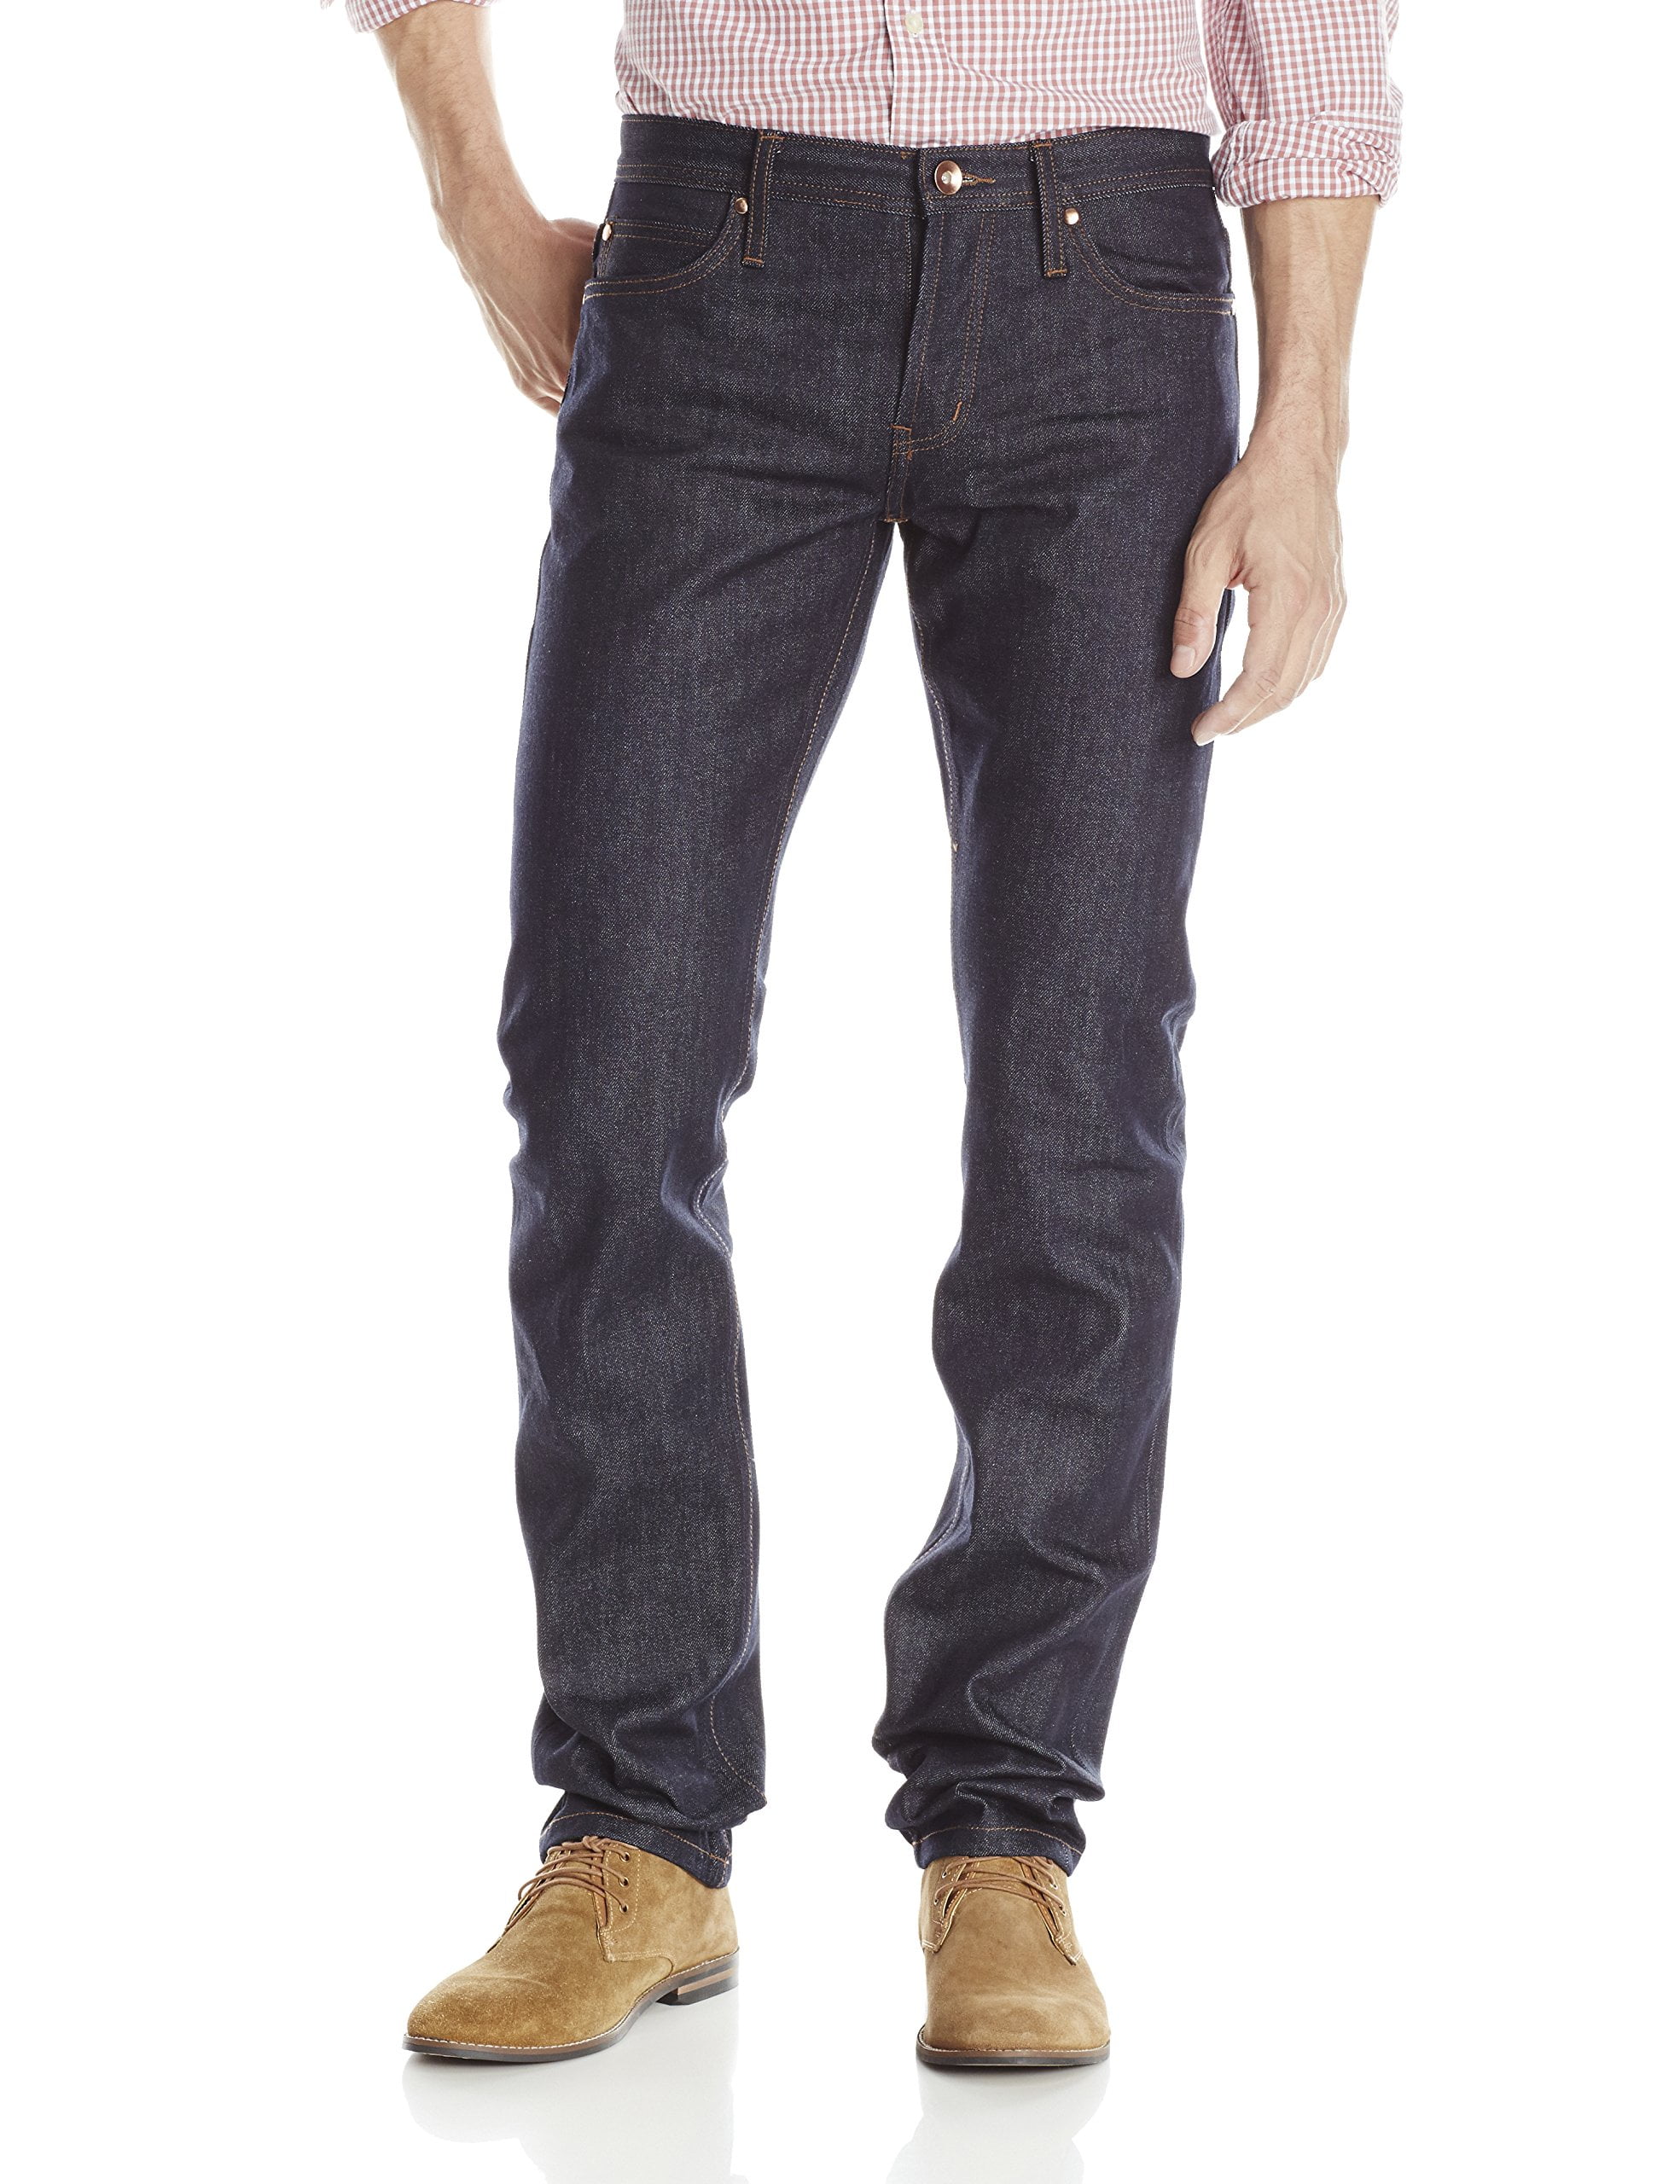 mens skinny jeans 30x34